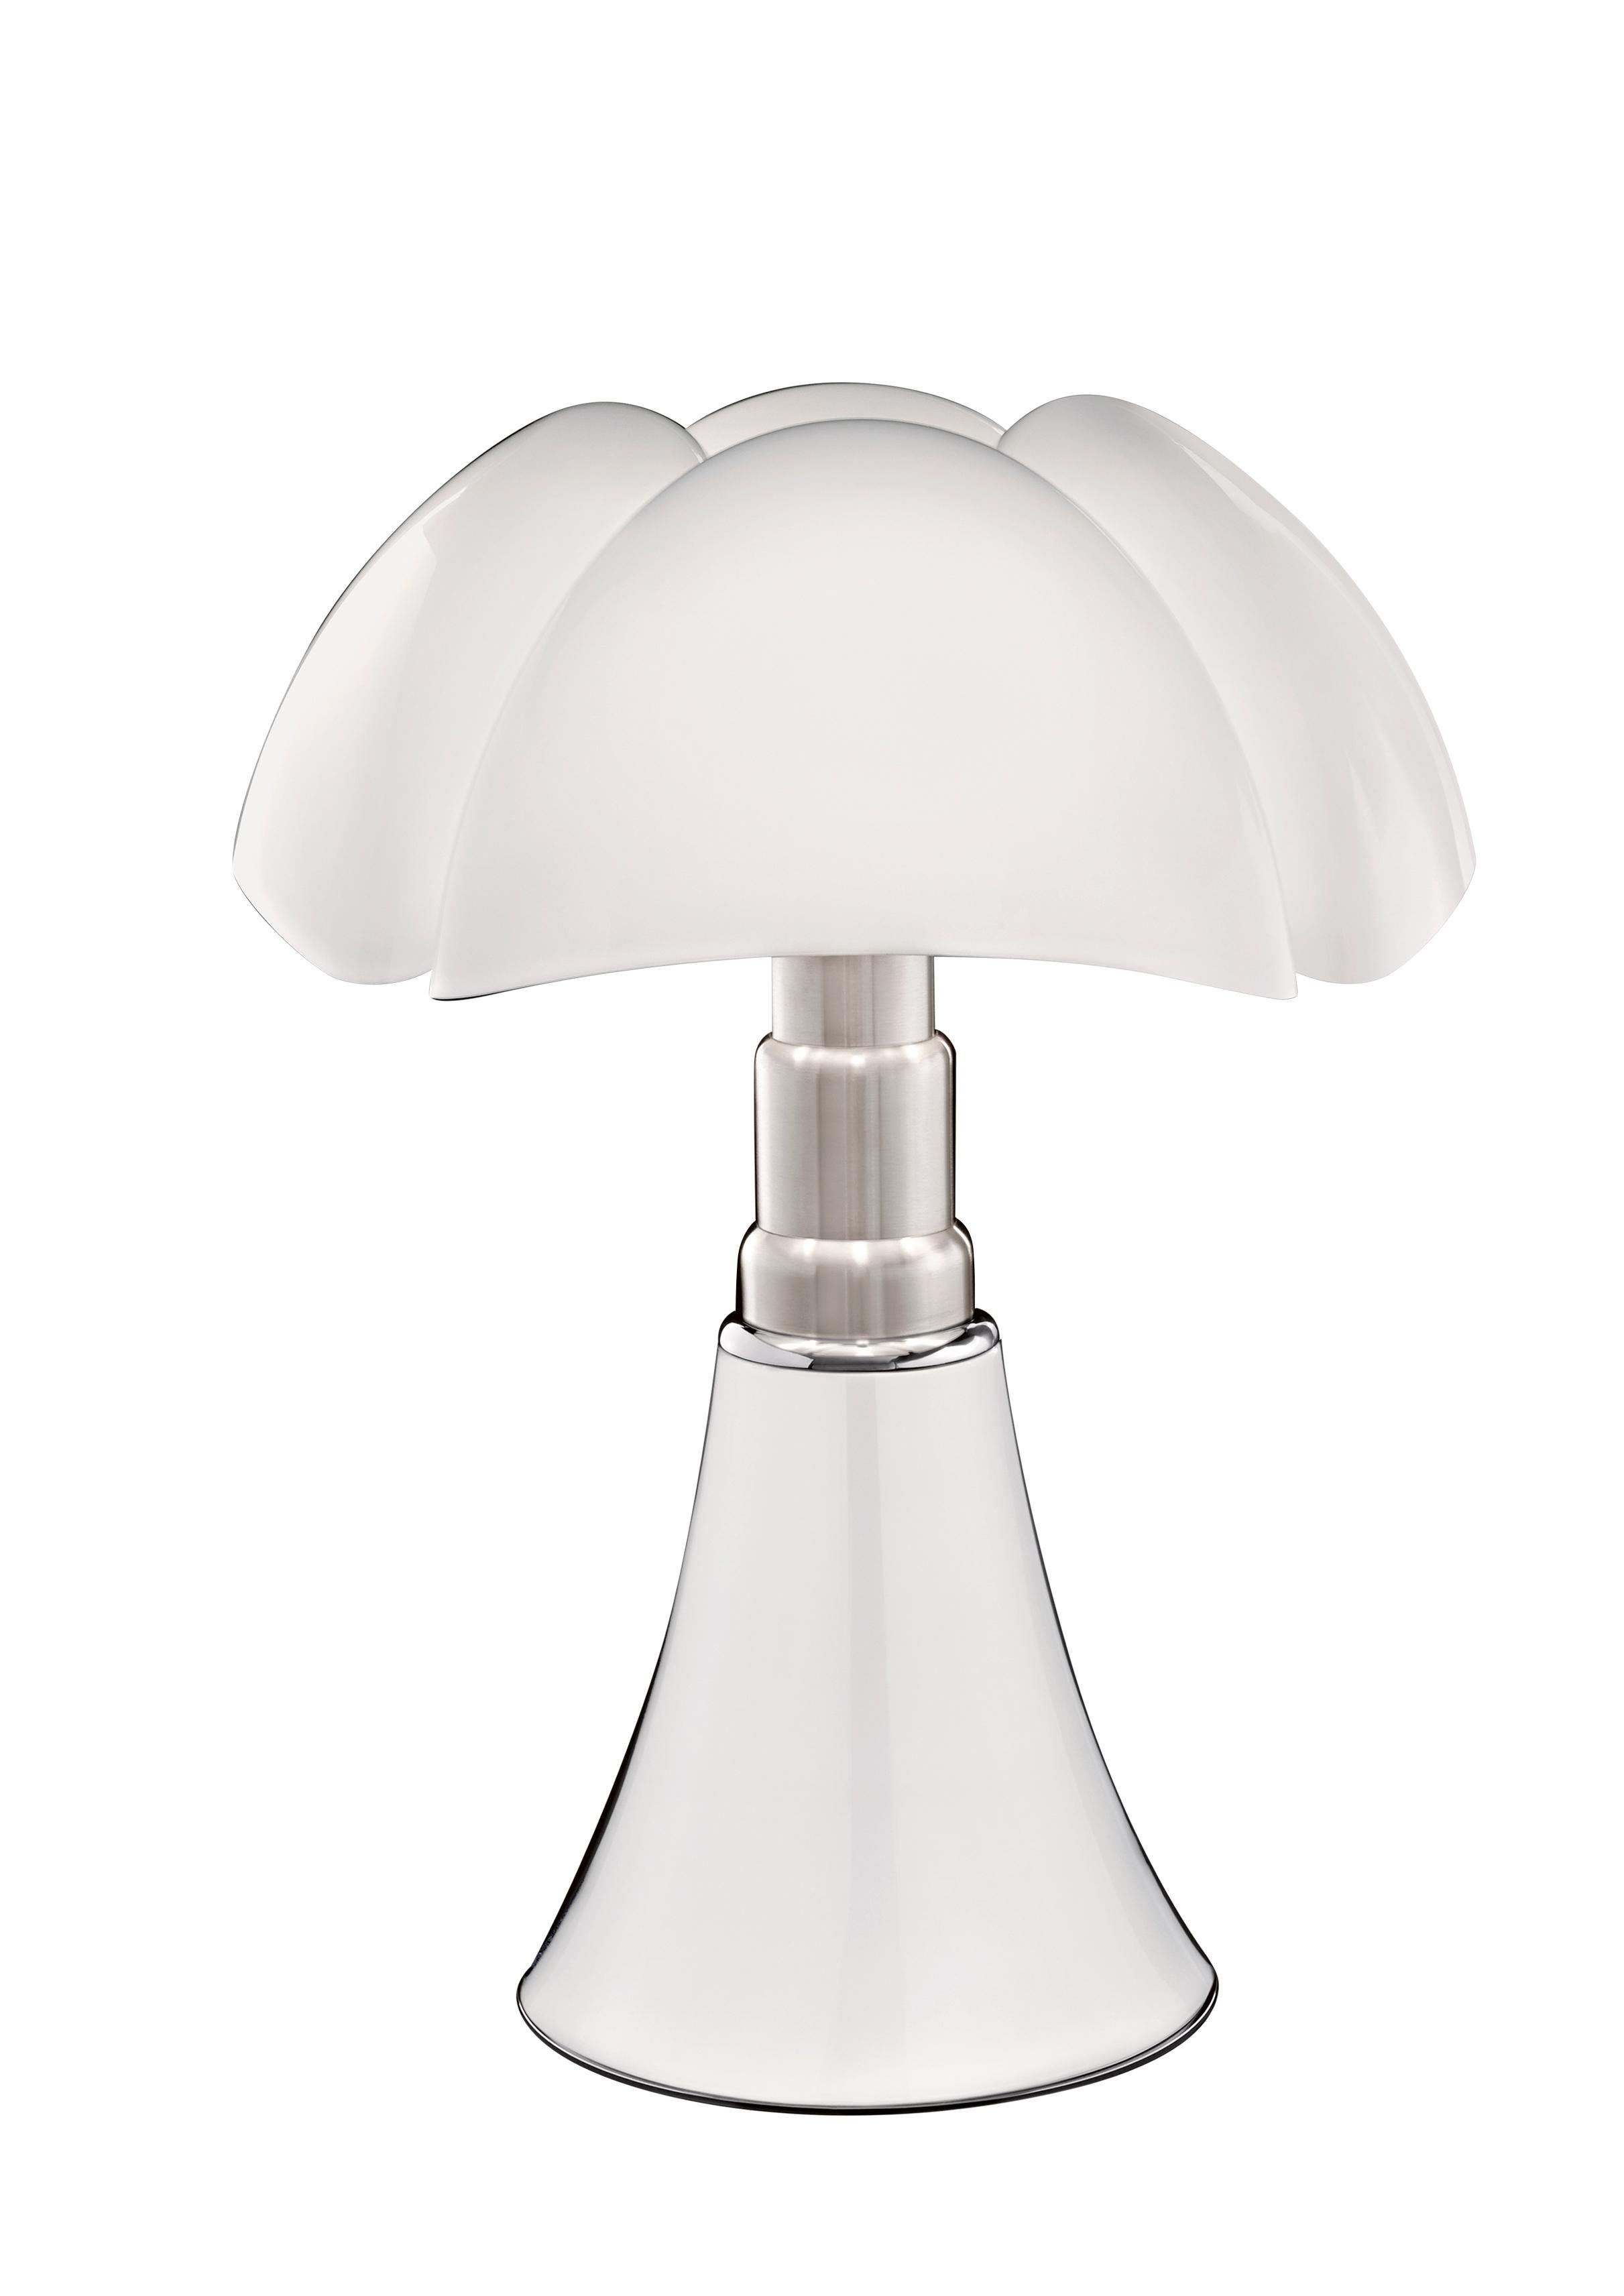 En vente : White (Bianco) Lampe de bureau Martinelli Luce LED Minipipistrello 620/J de Gae Aulenti 2